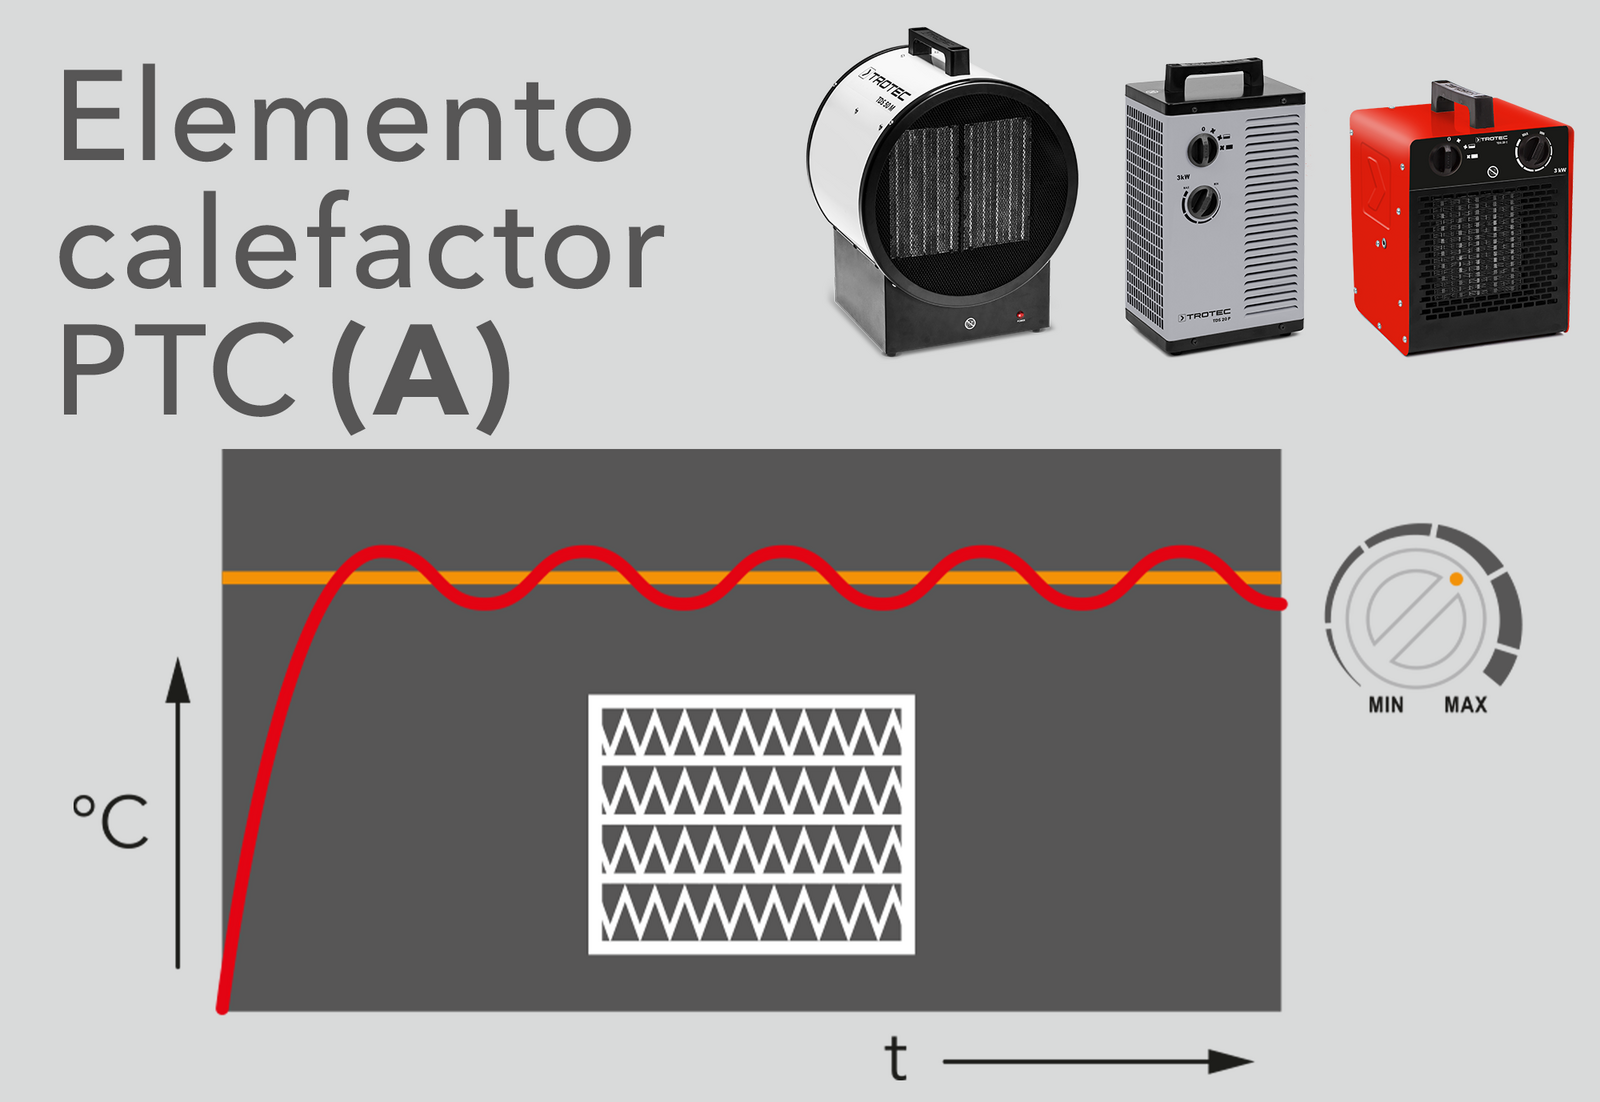 Elementos calefactores de cerámica PTC